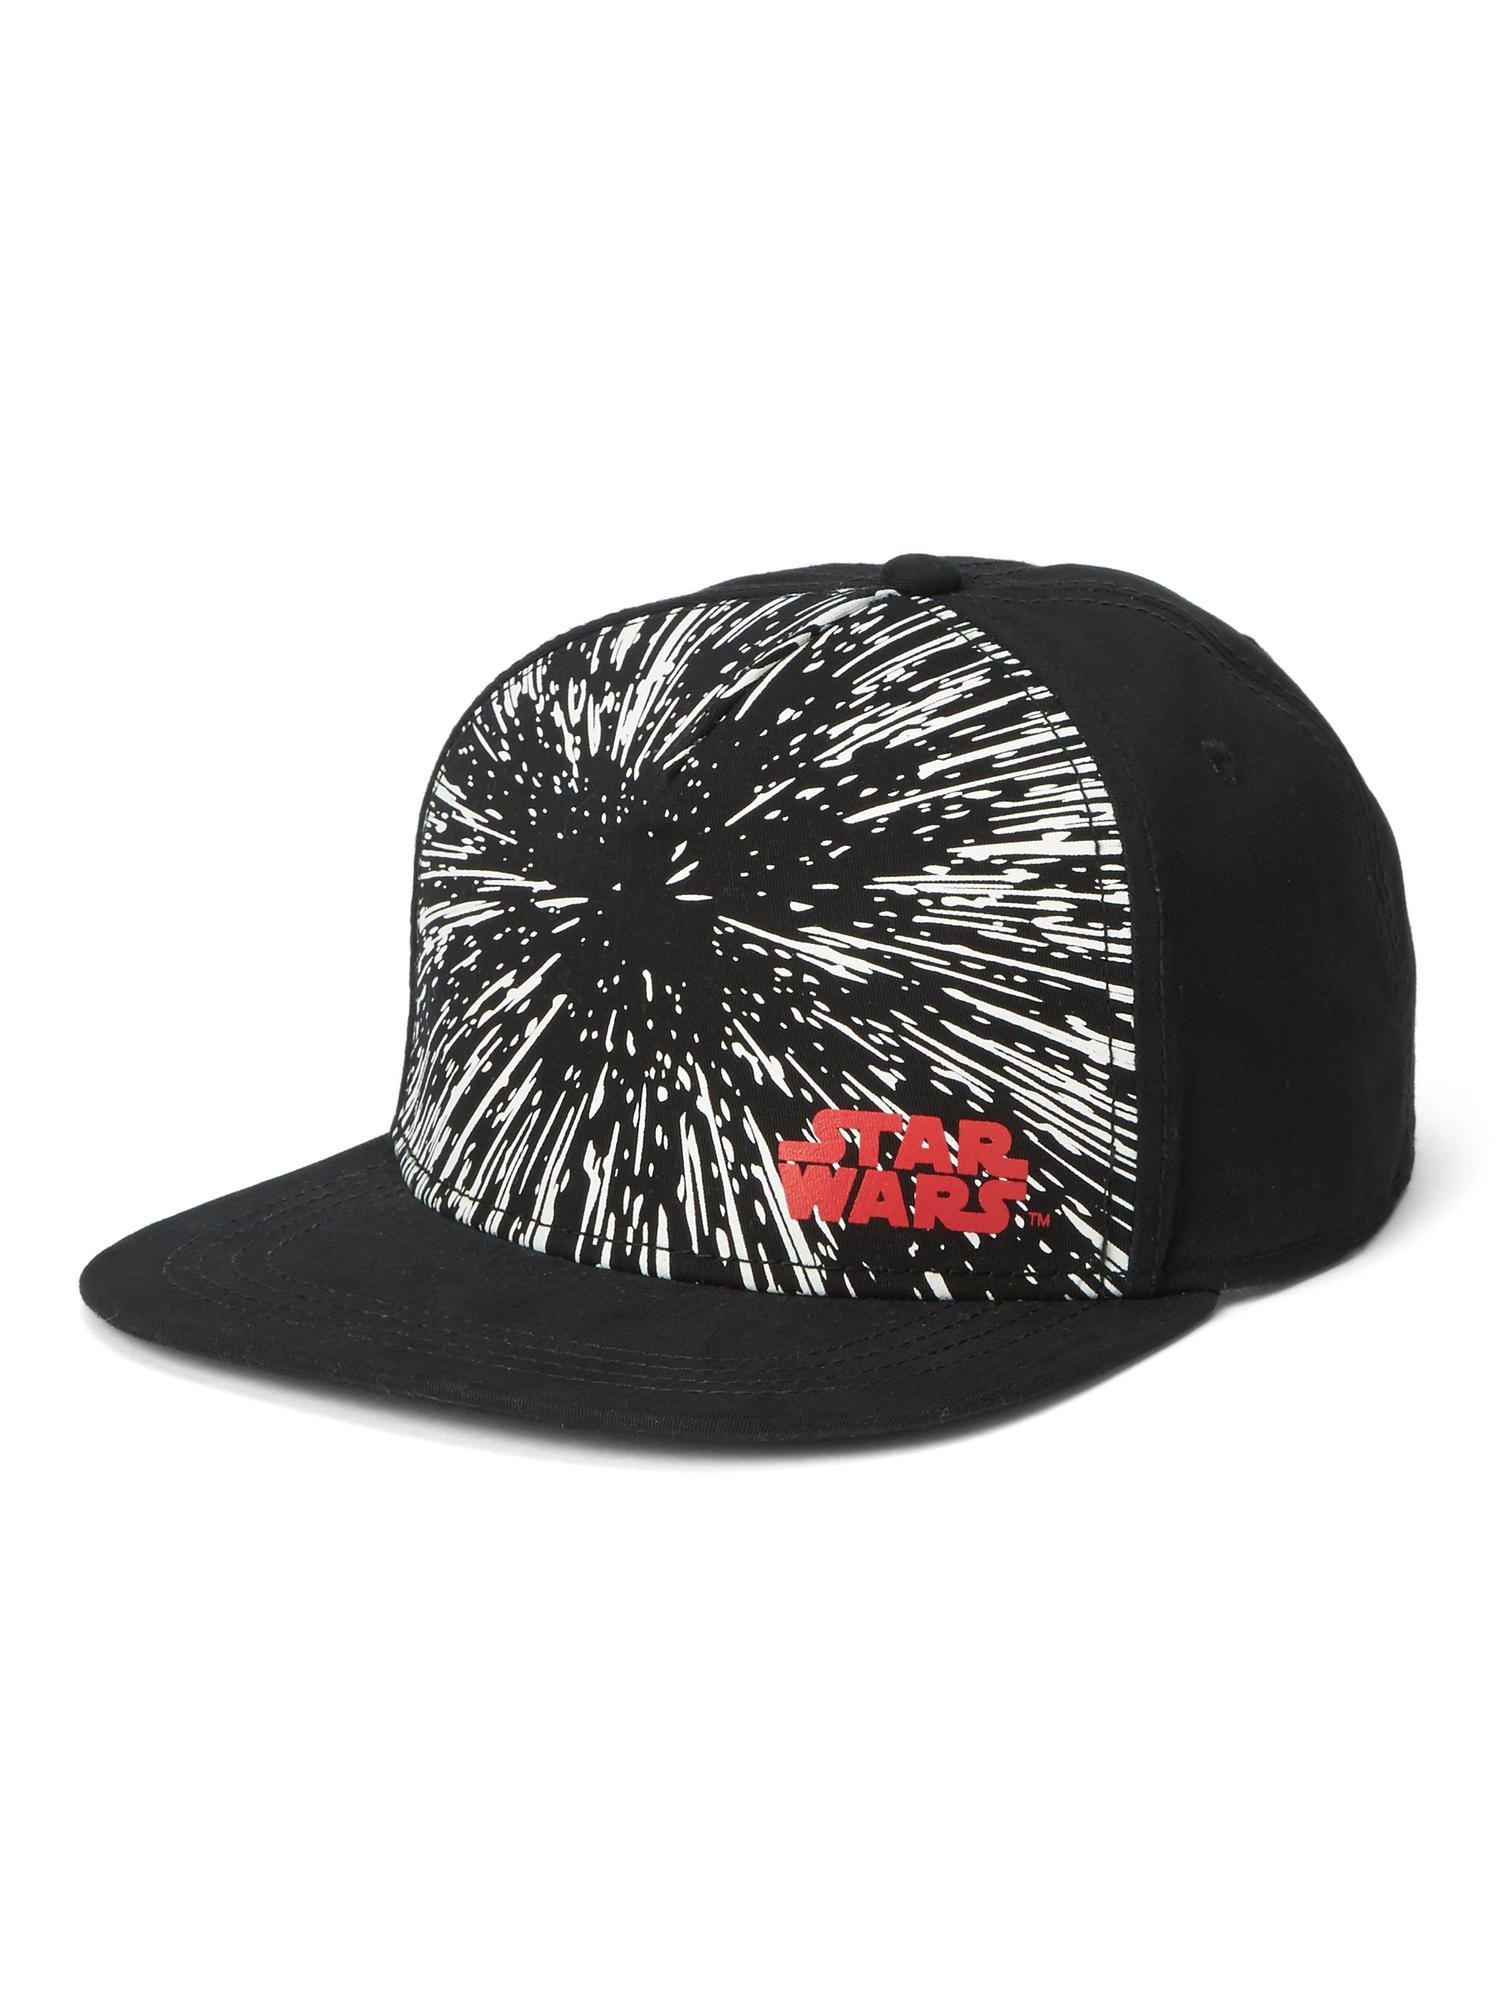 Gap | Star Wars™ şapka product image